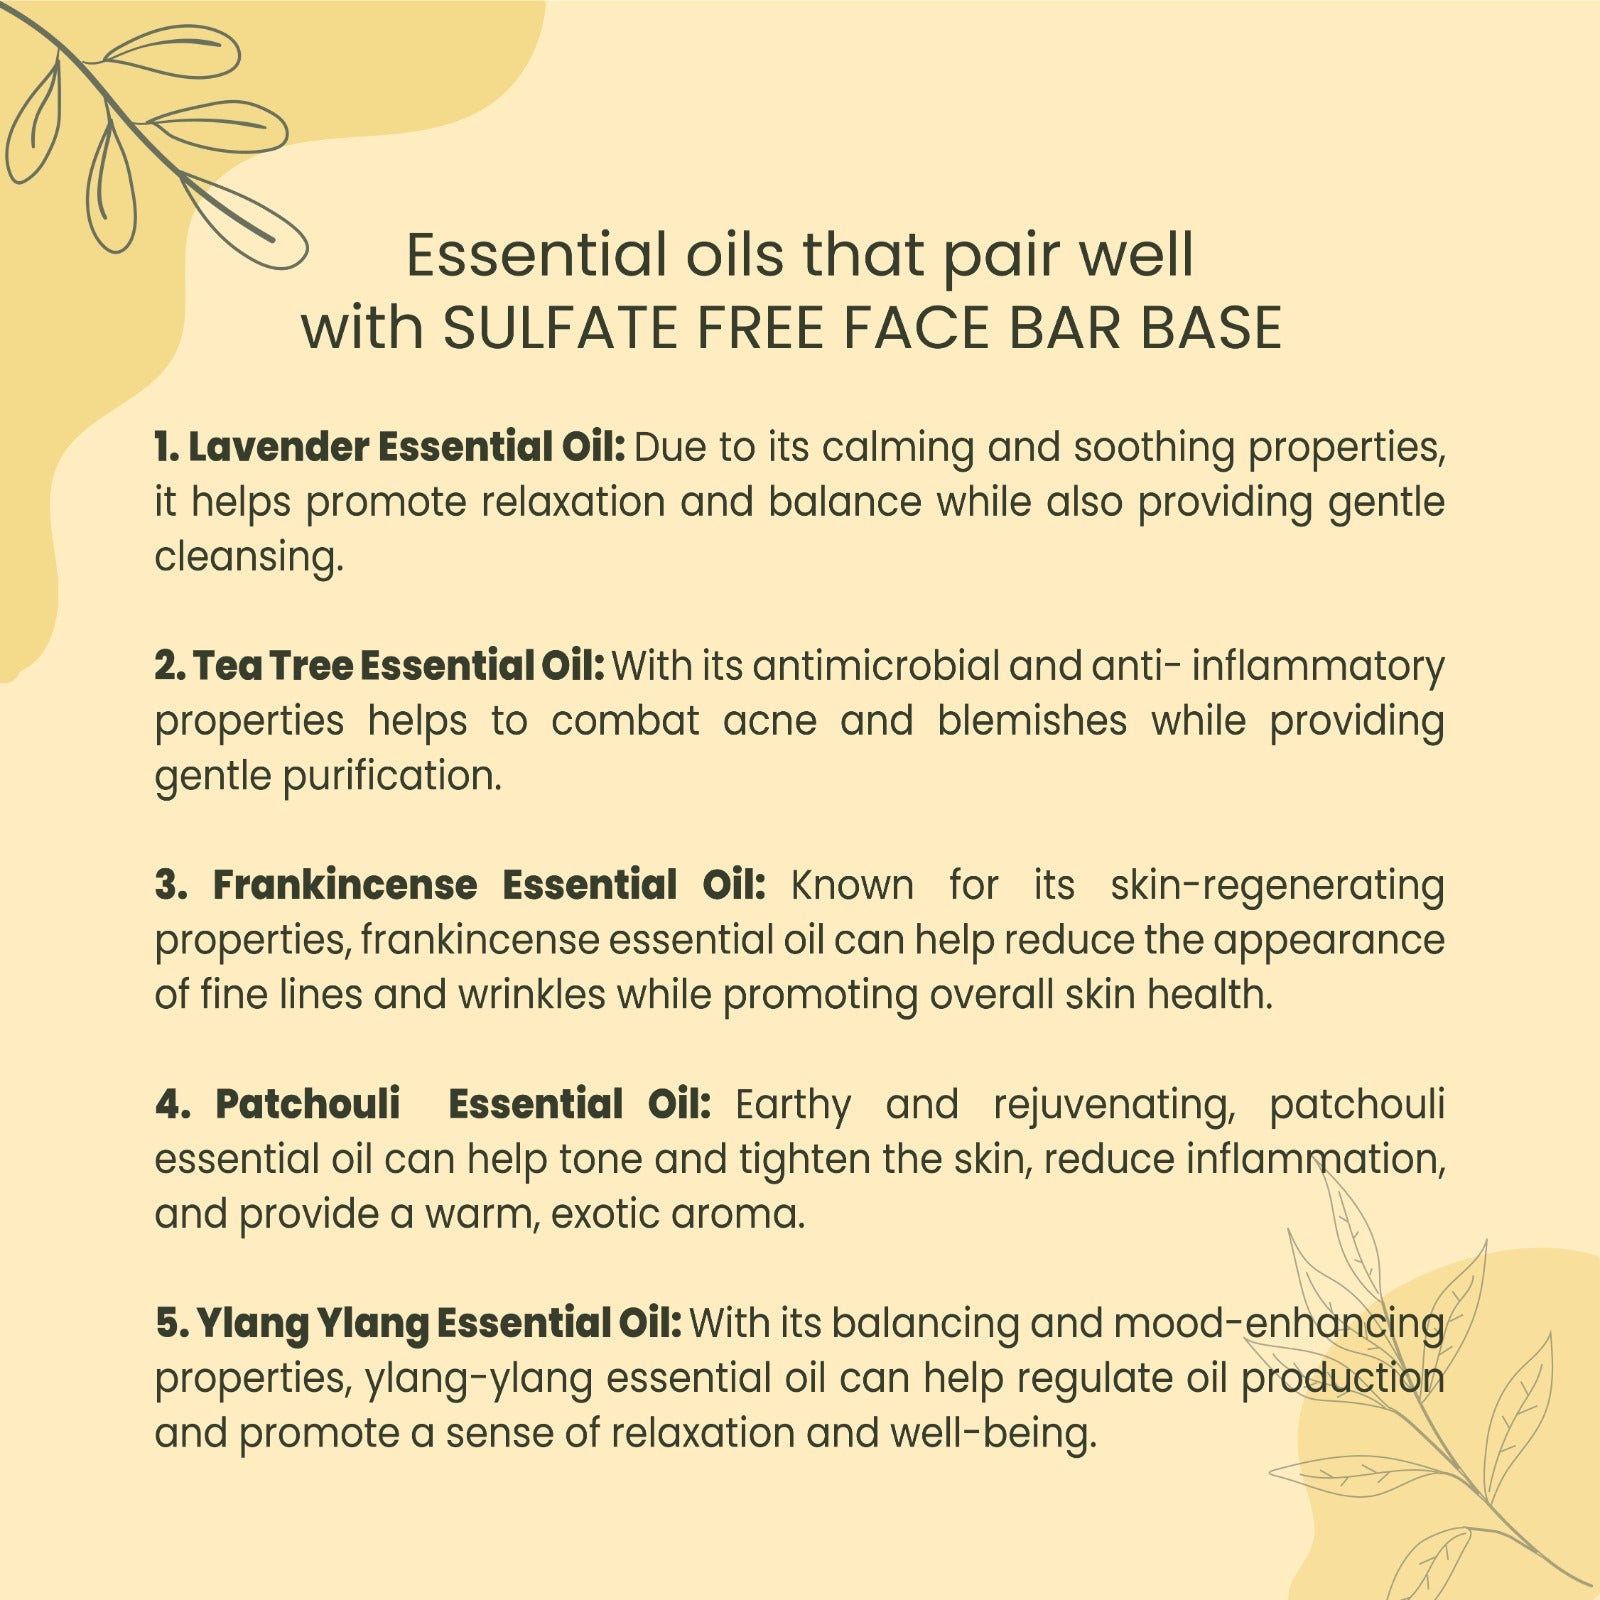 Sulfate Free Face Bar Base